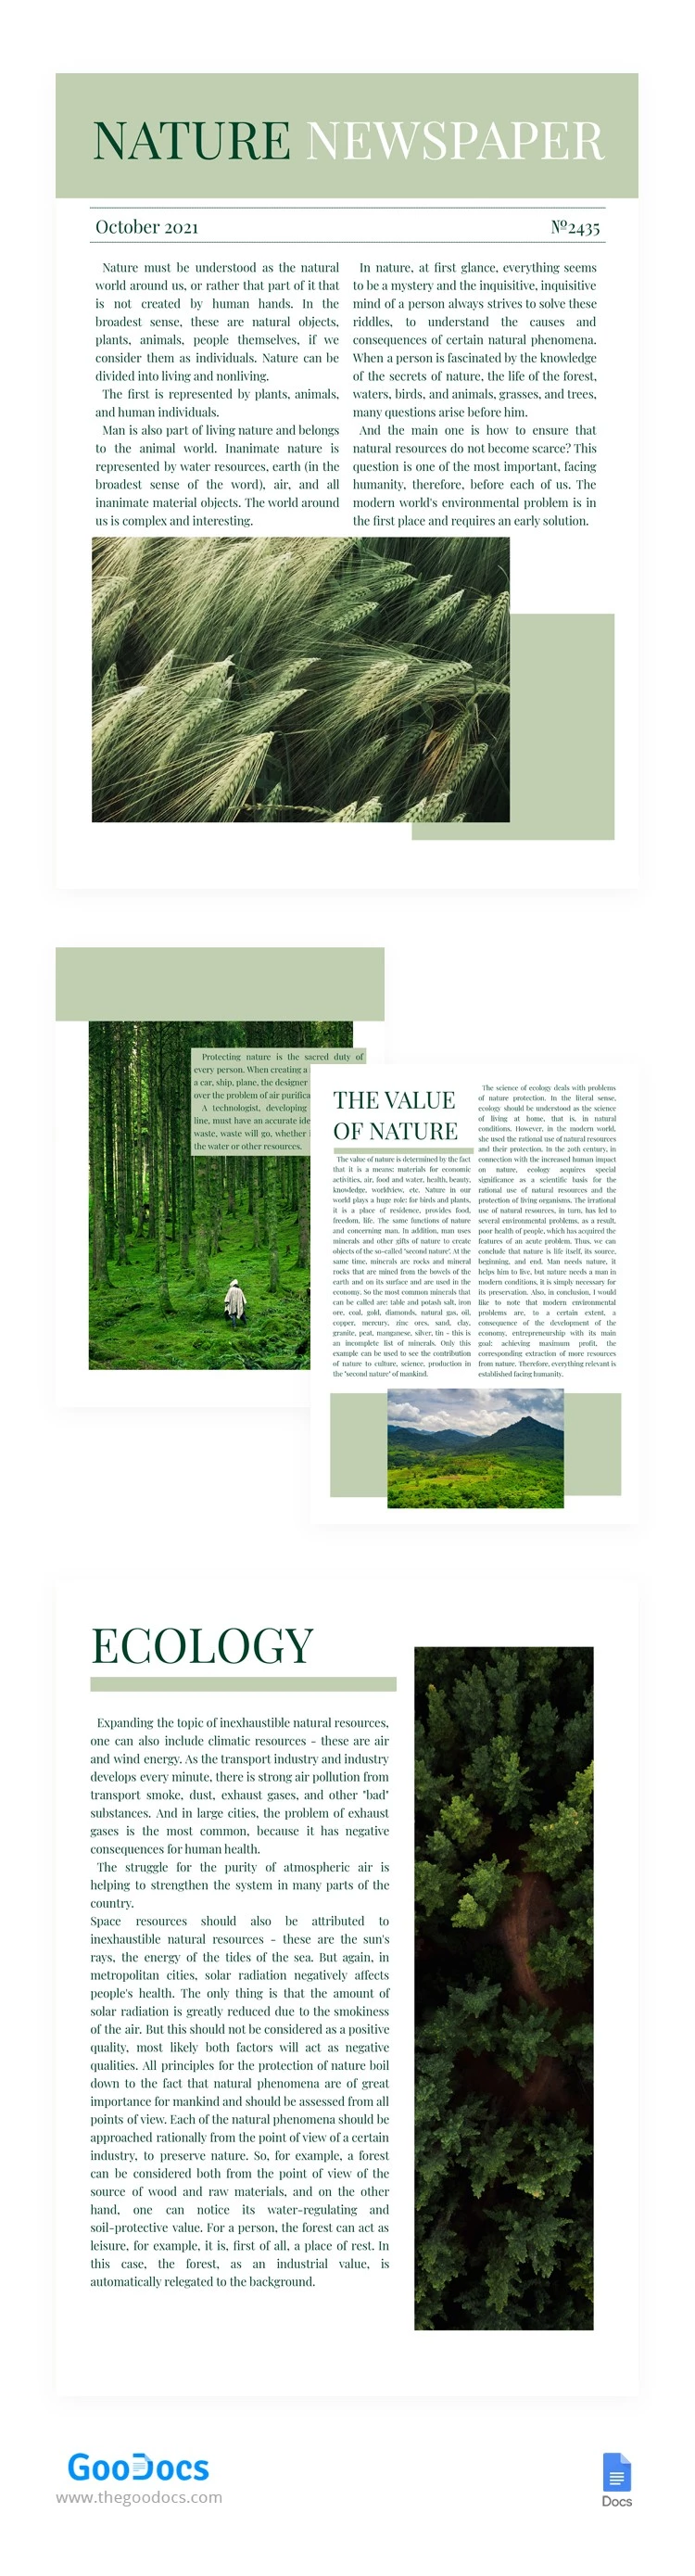 Journal de la nature verte - free Google Docs Template - 10062140